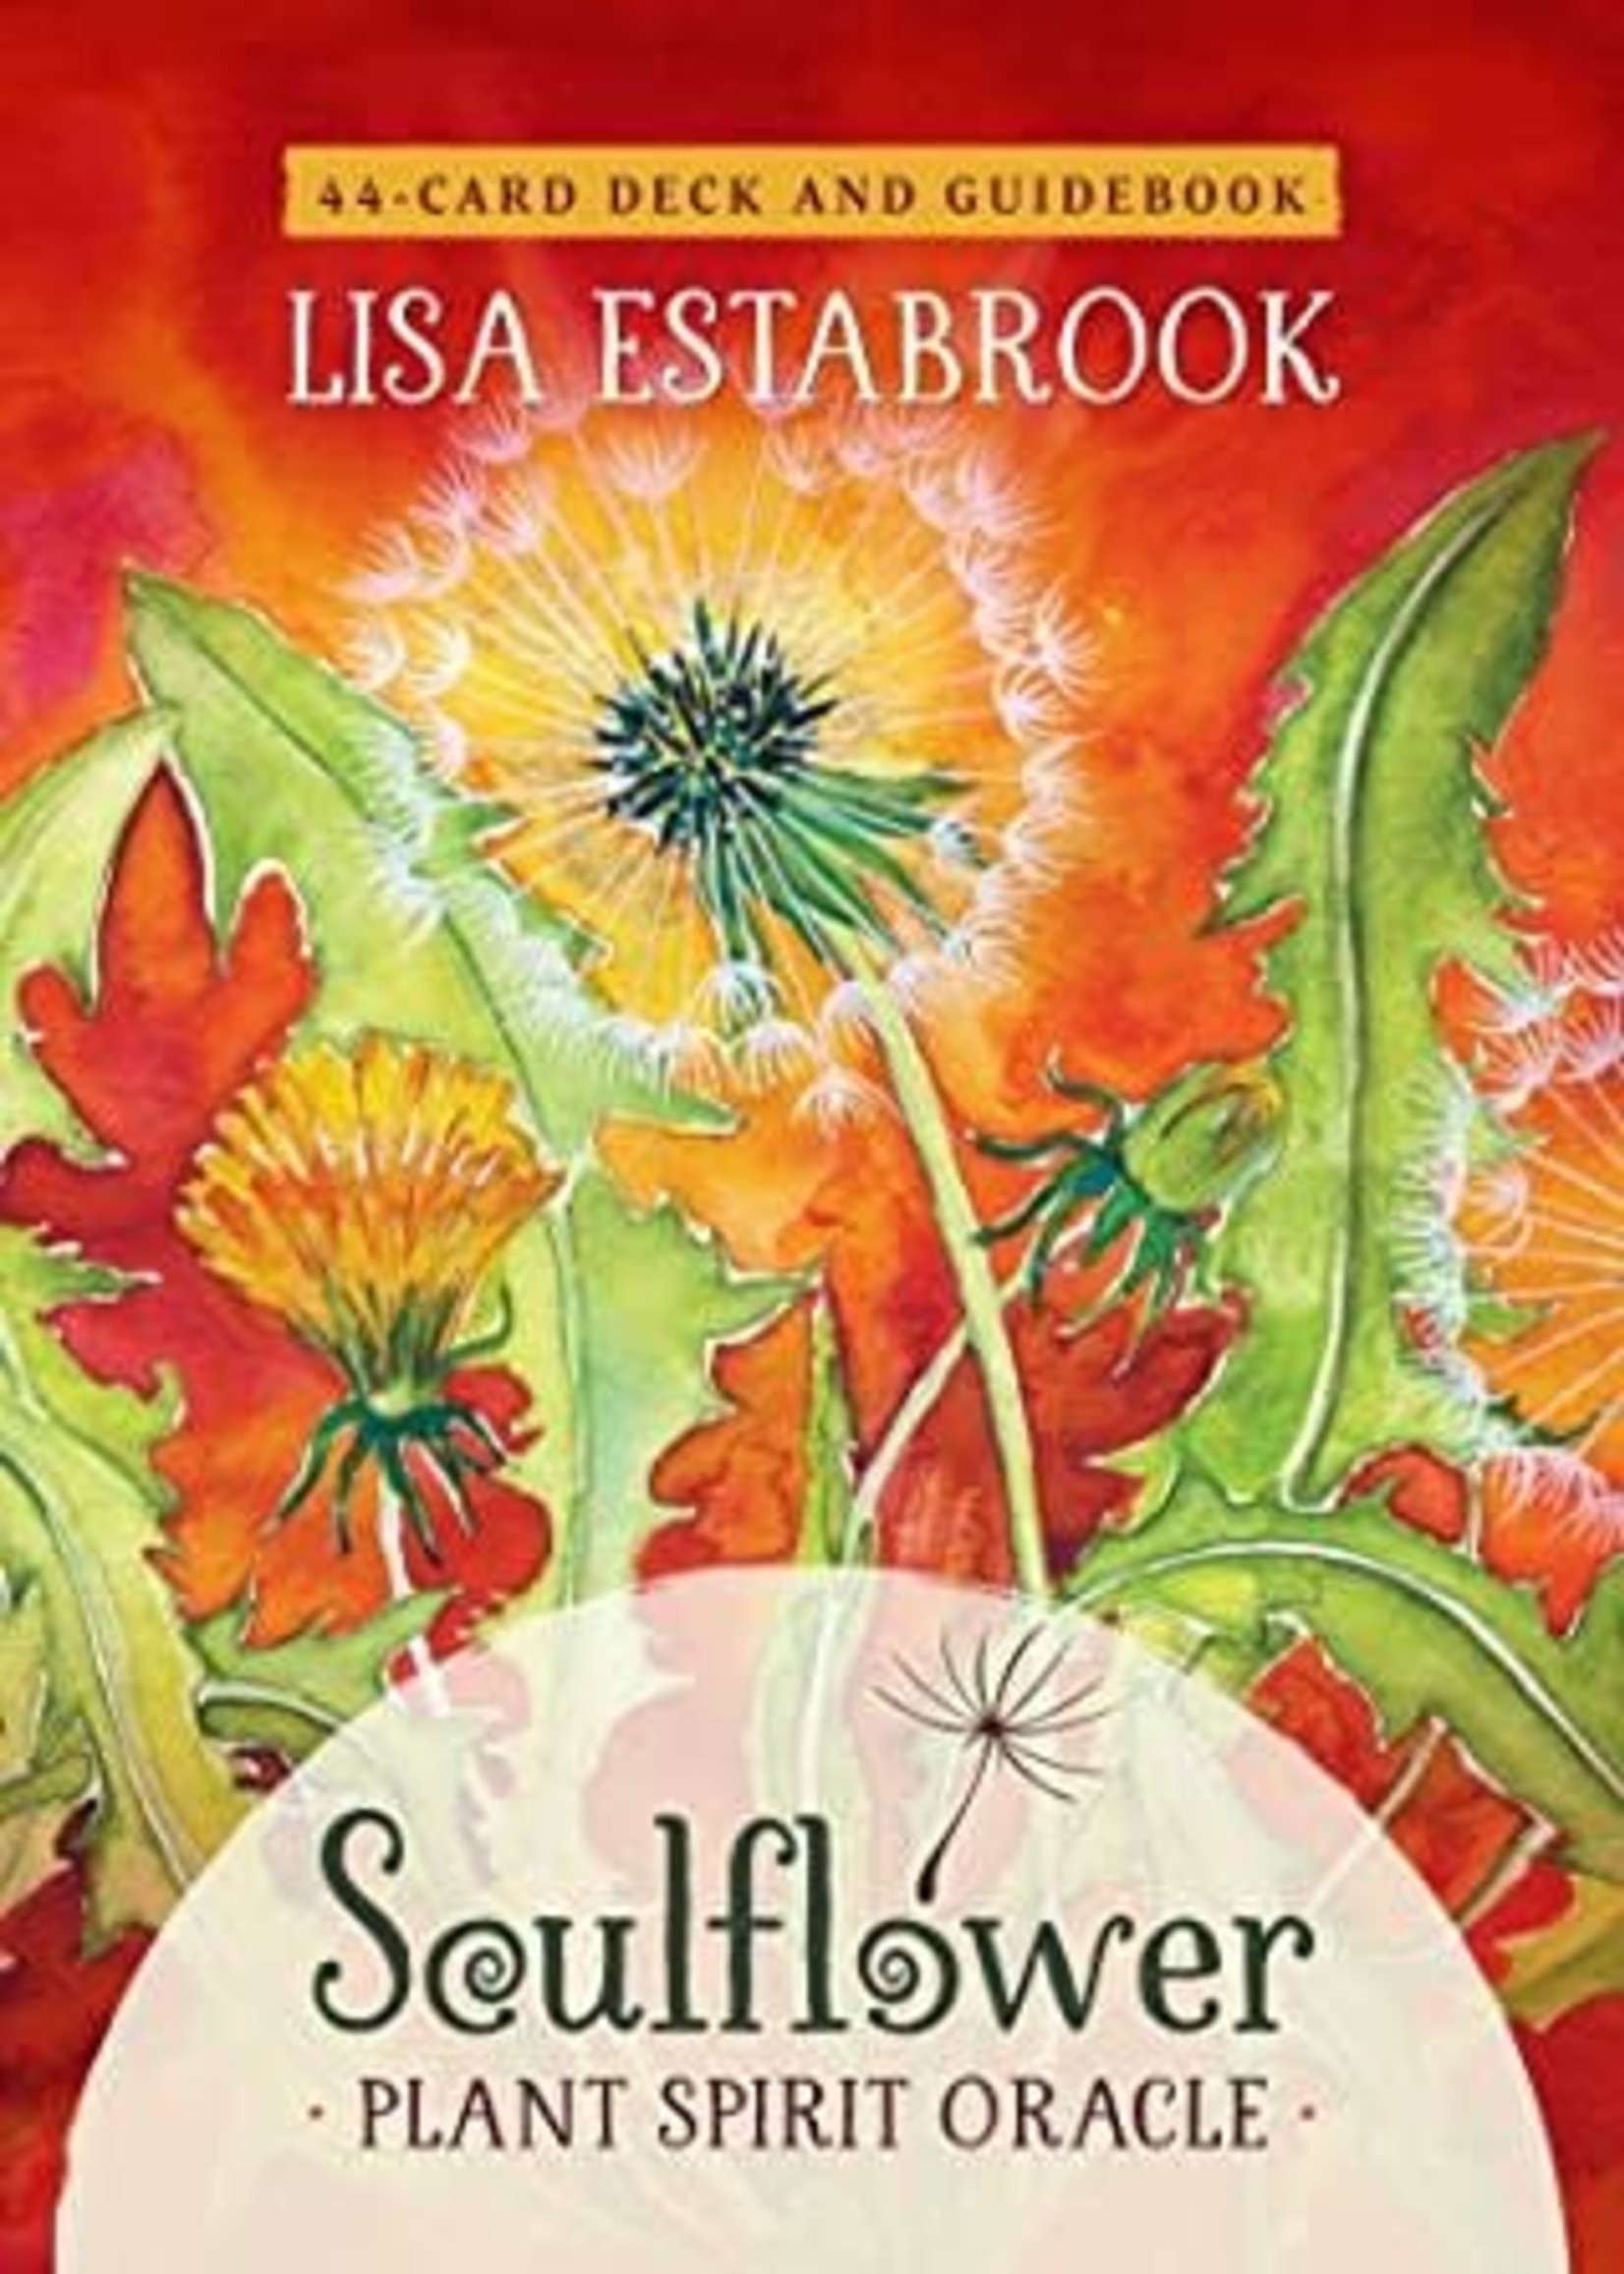 Soulflower Plant Spirit Oracle: 44-Card Deck and Guidebook by Lisa Estabrook